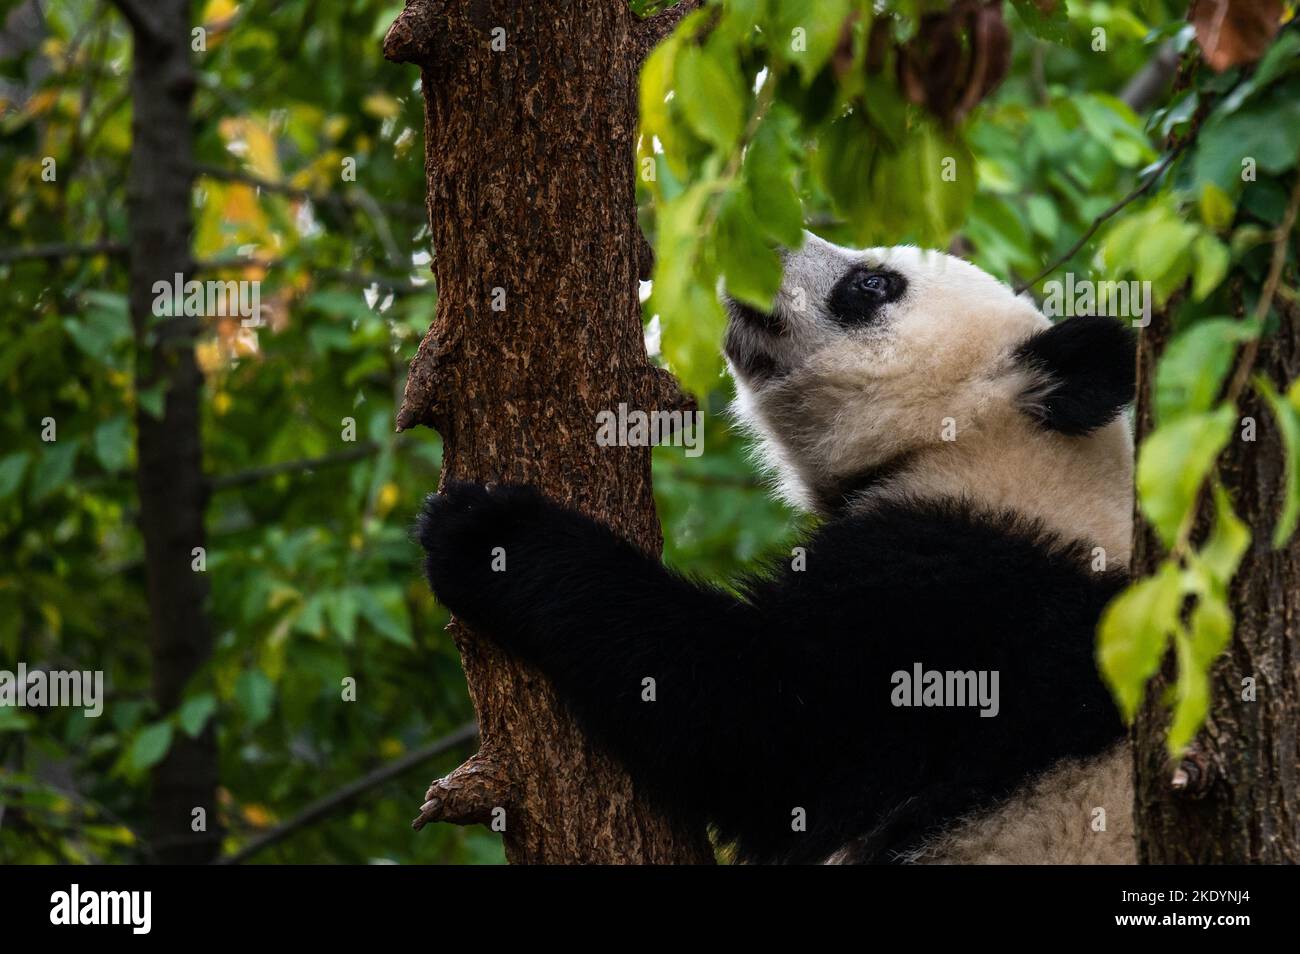 A giant panda bear climbing a tree Stock Photo